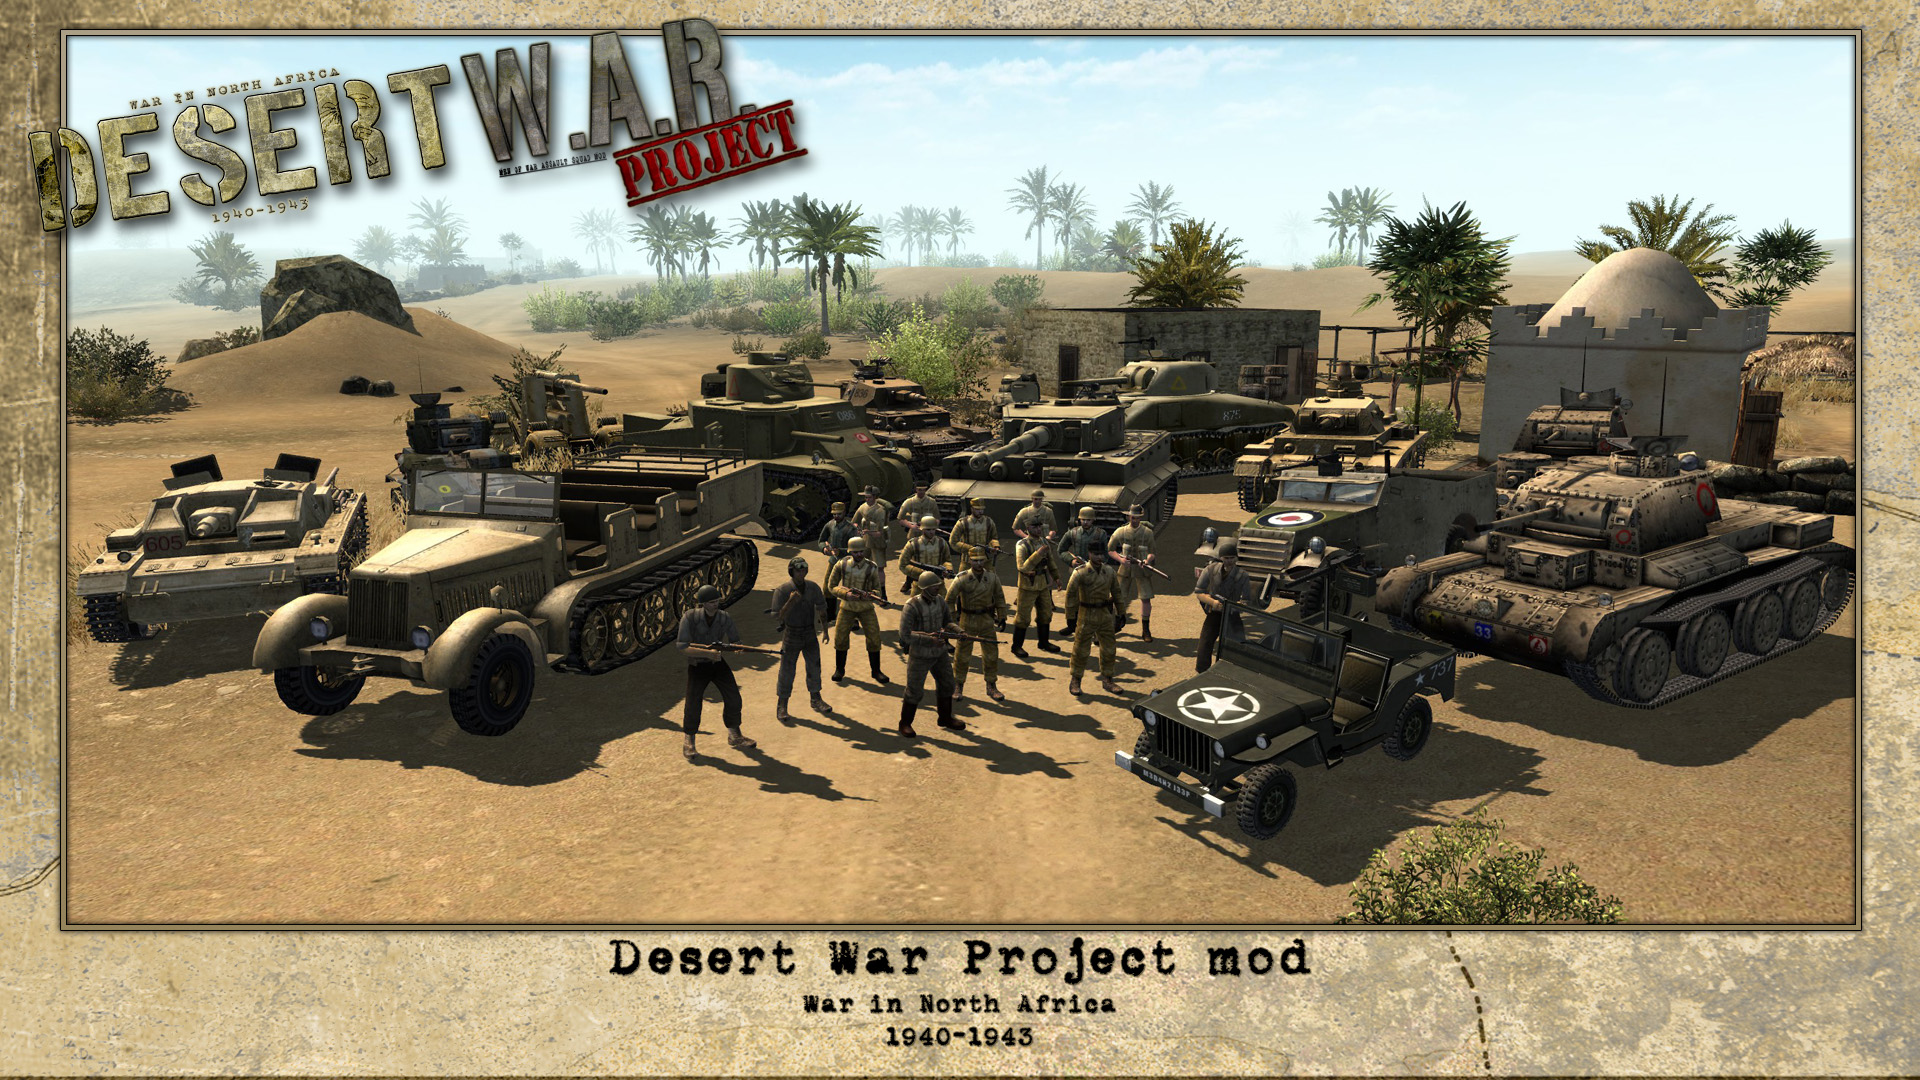 men of war assault squad mods